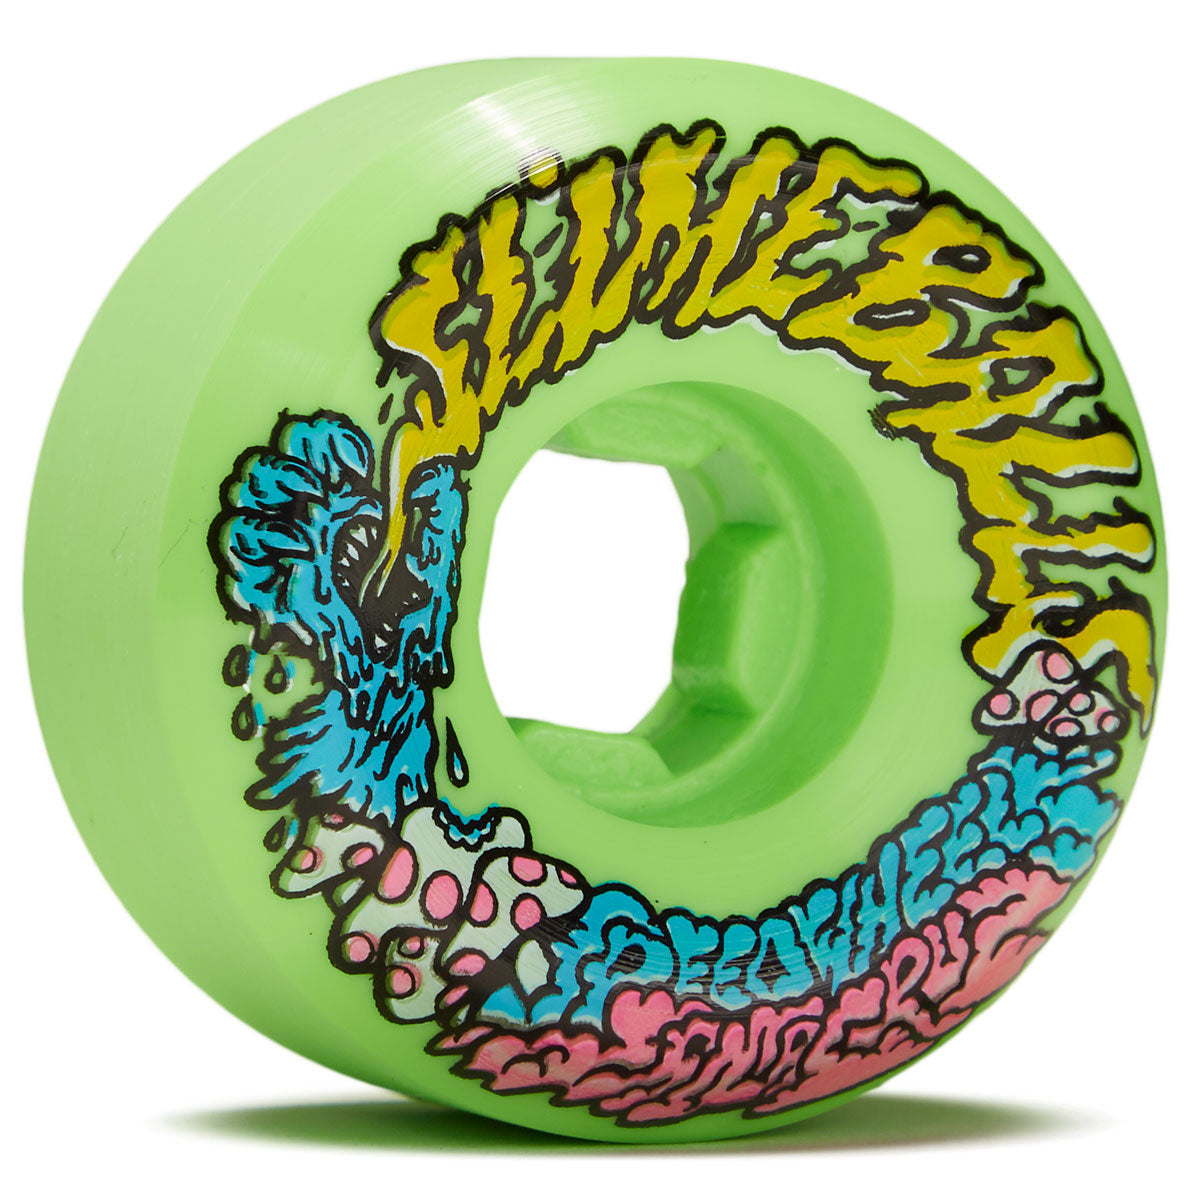 Slime Balls Vomit Mini 97a Skateboard Wheels - Green/Green - 53mm image 1